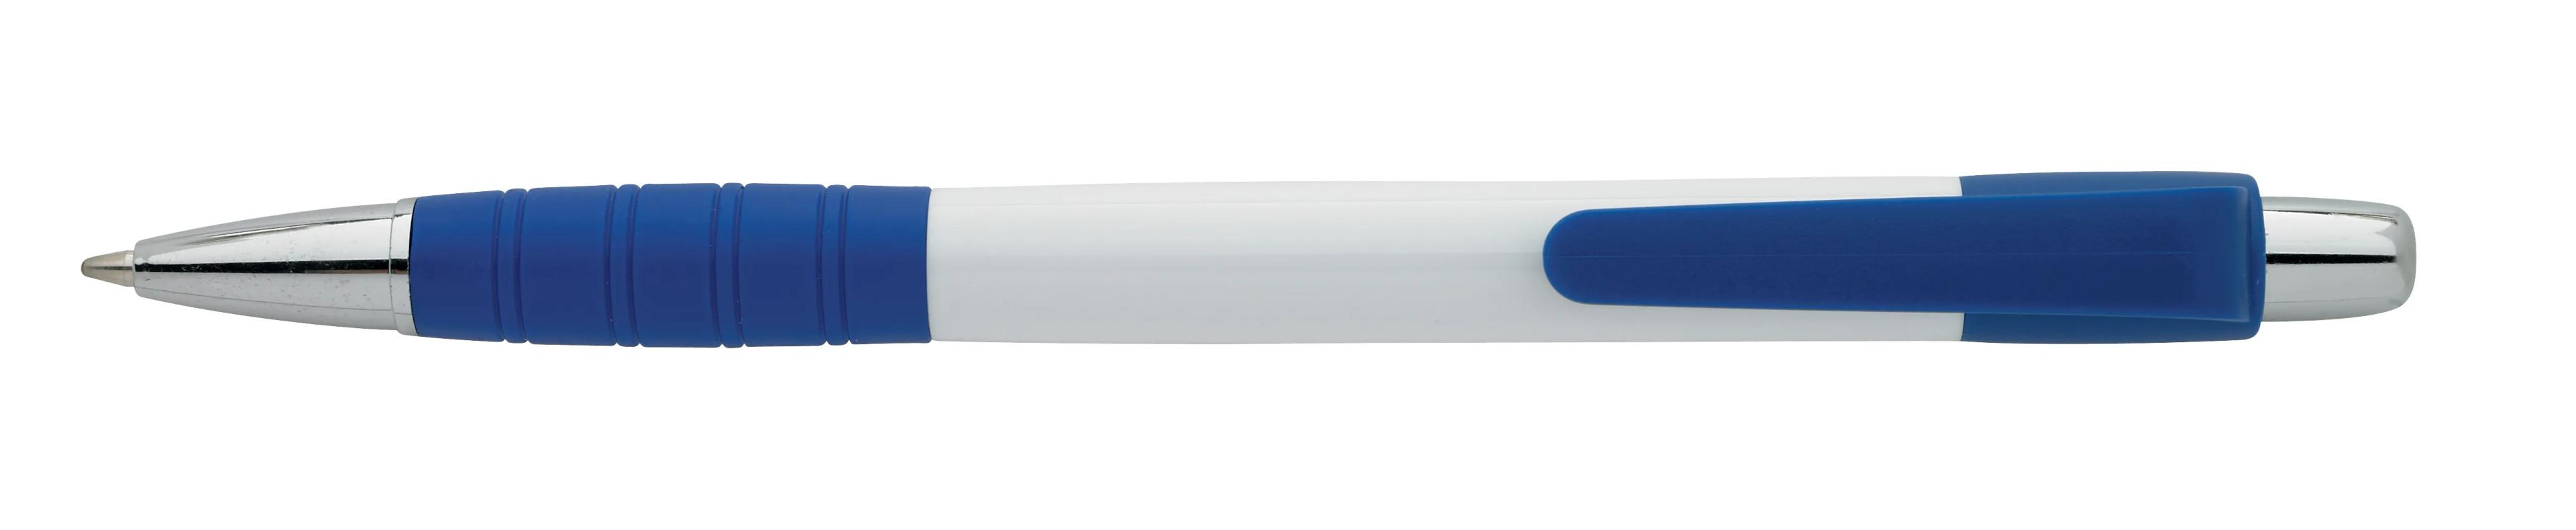 White Element Pen 2 of 43